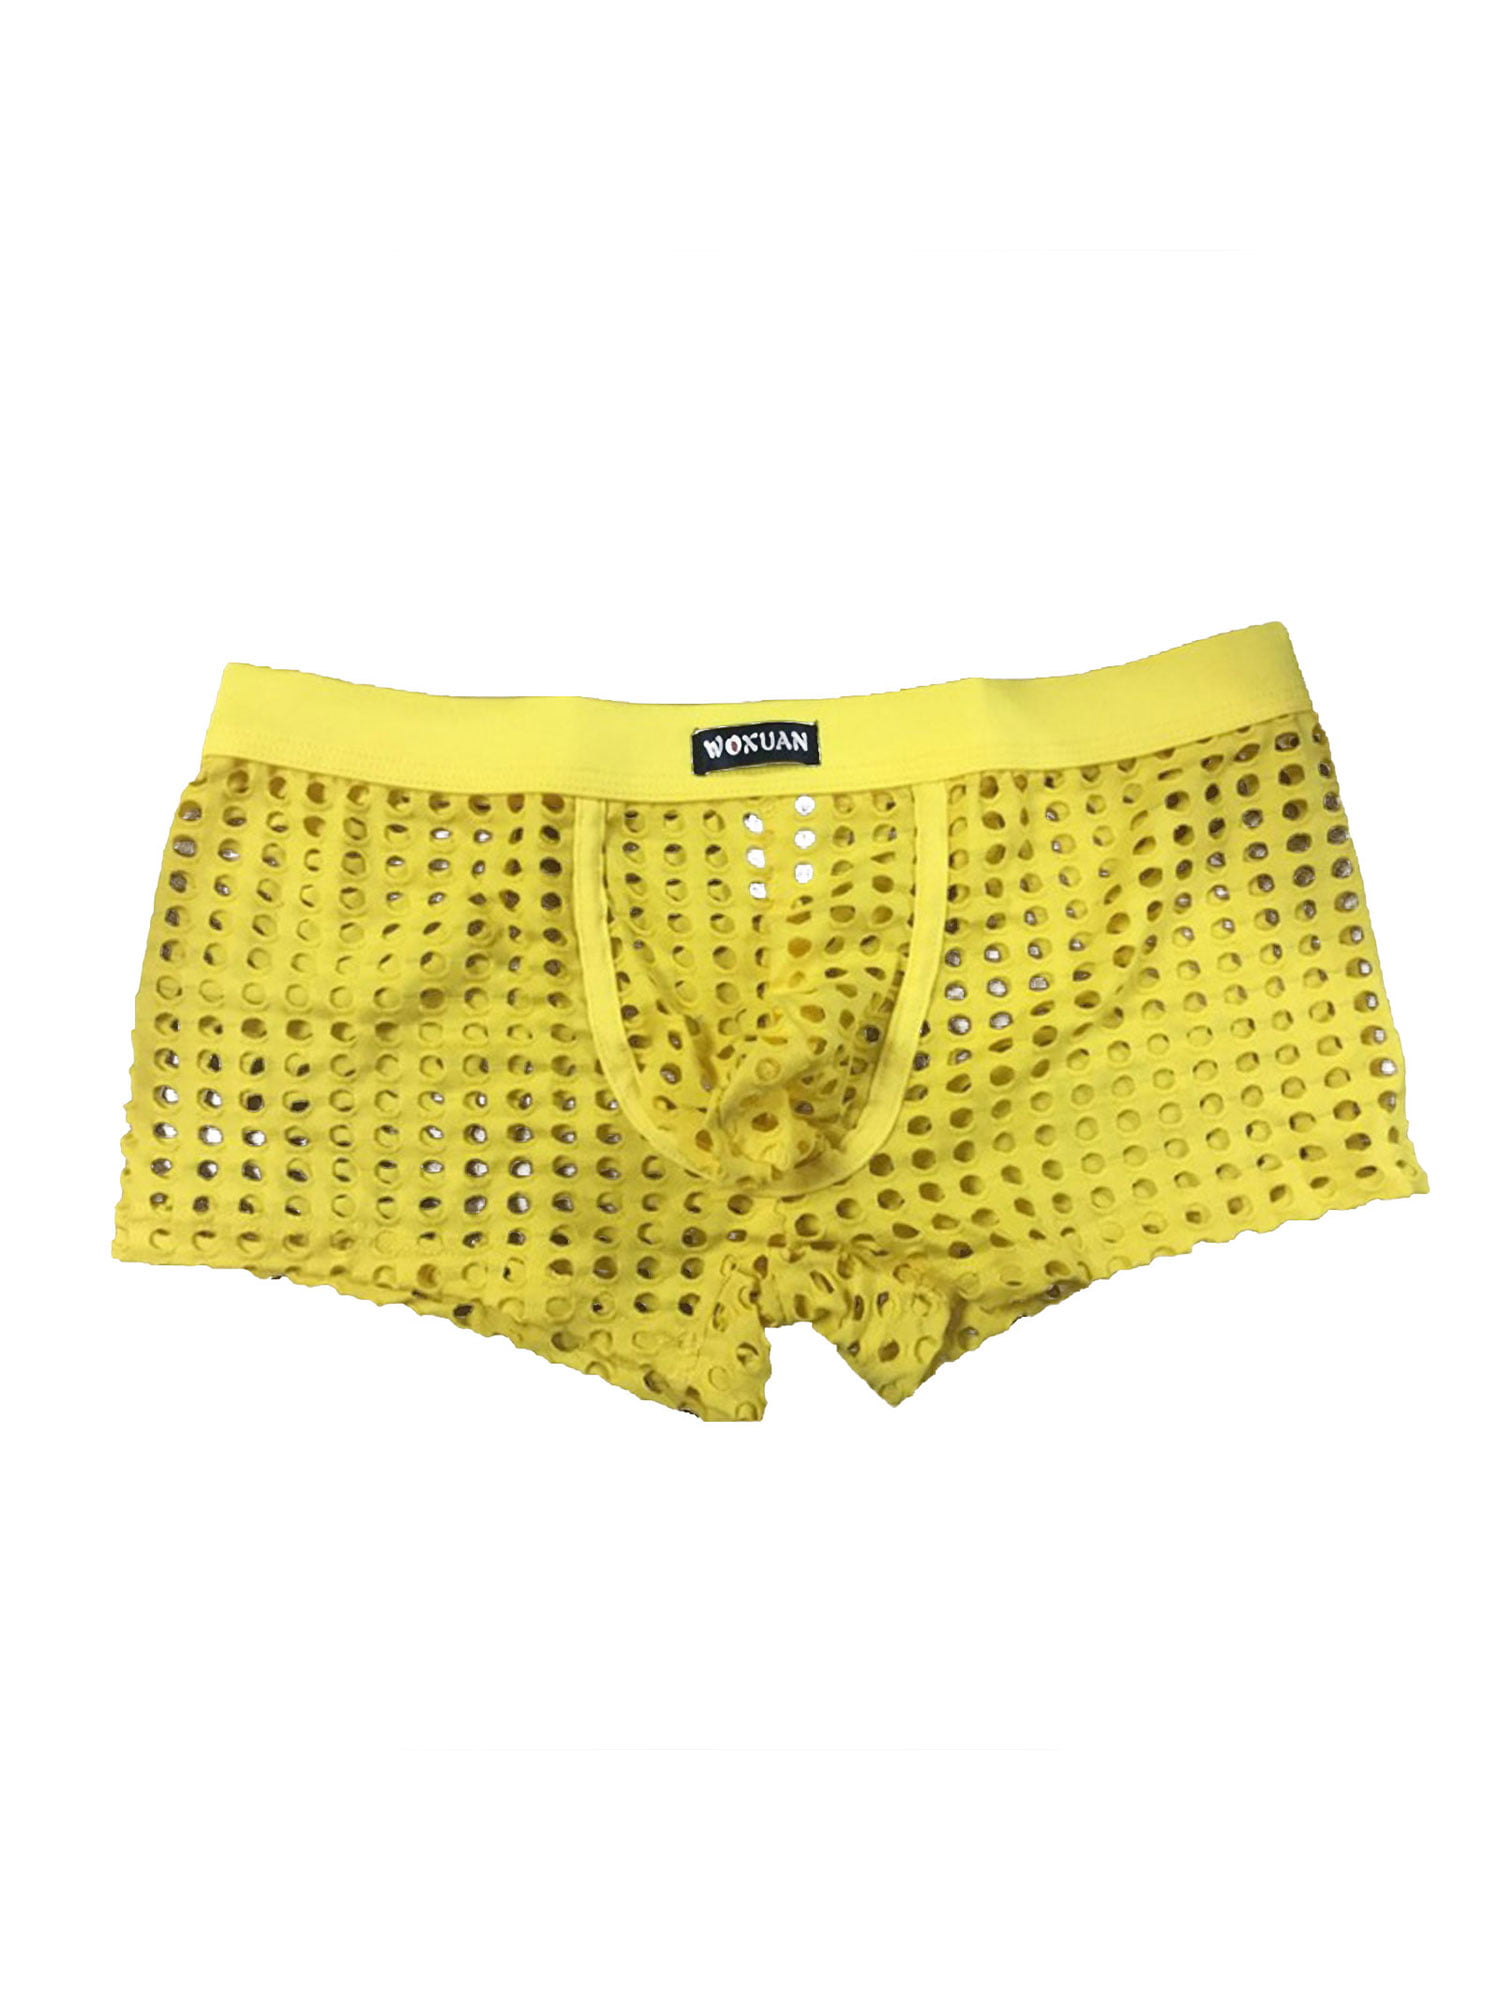 Fishnet Boxer Briefs for Men See-through Breathable Low Rise Underpants ...